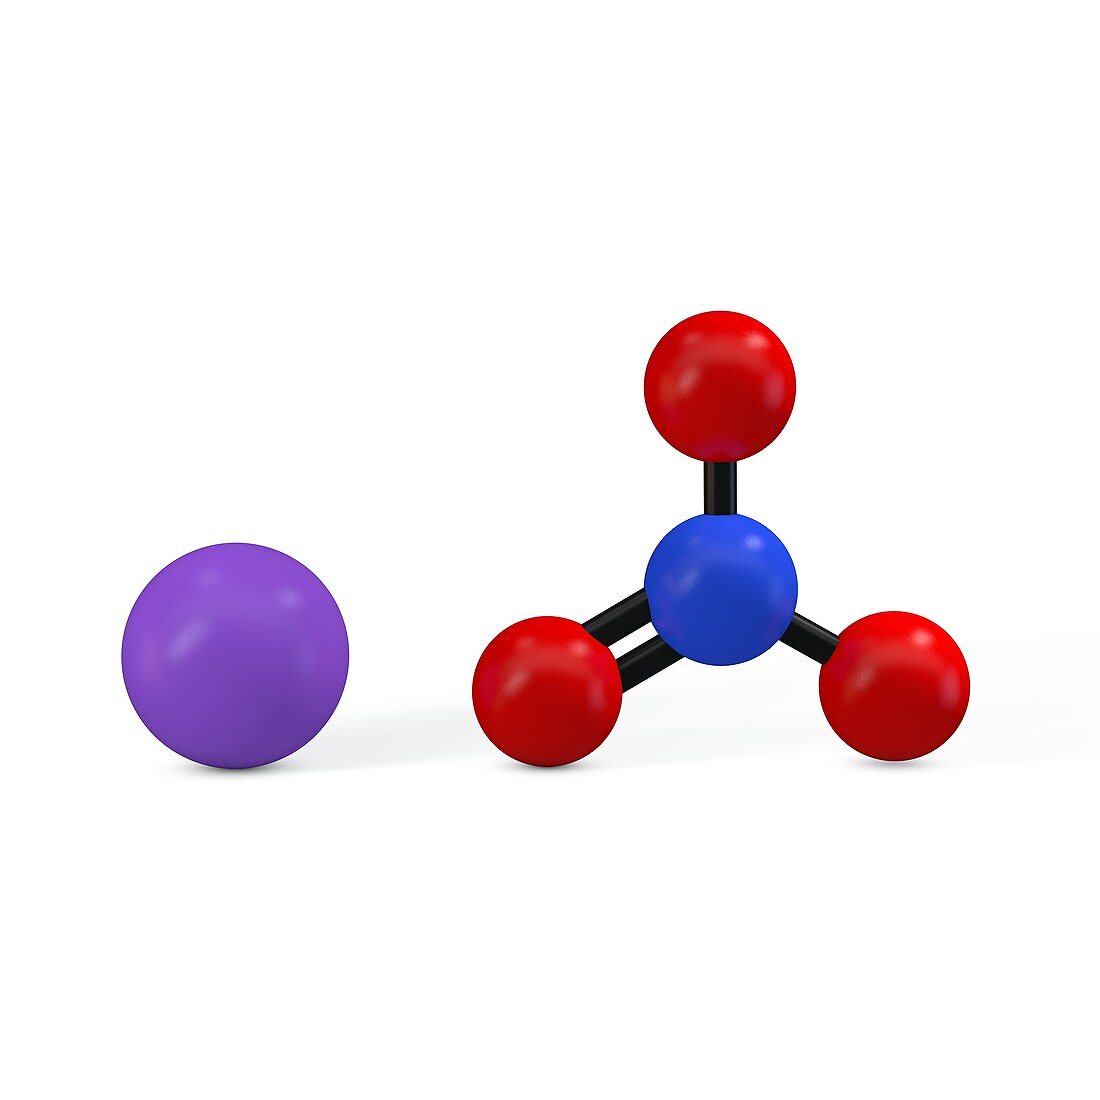 Sodium nitrate molecule, illustration